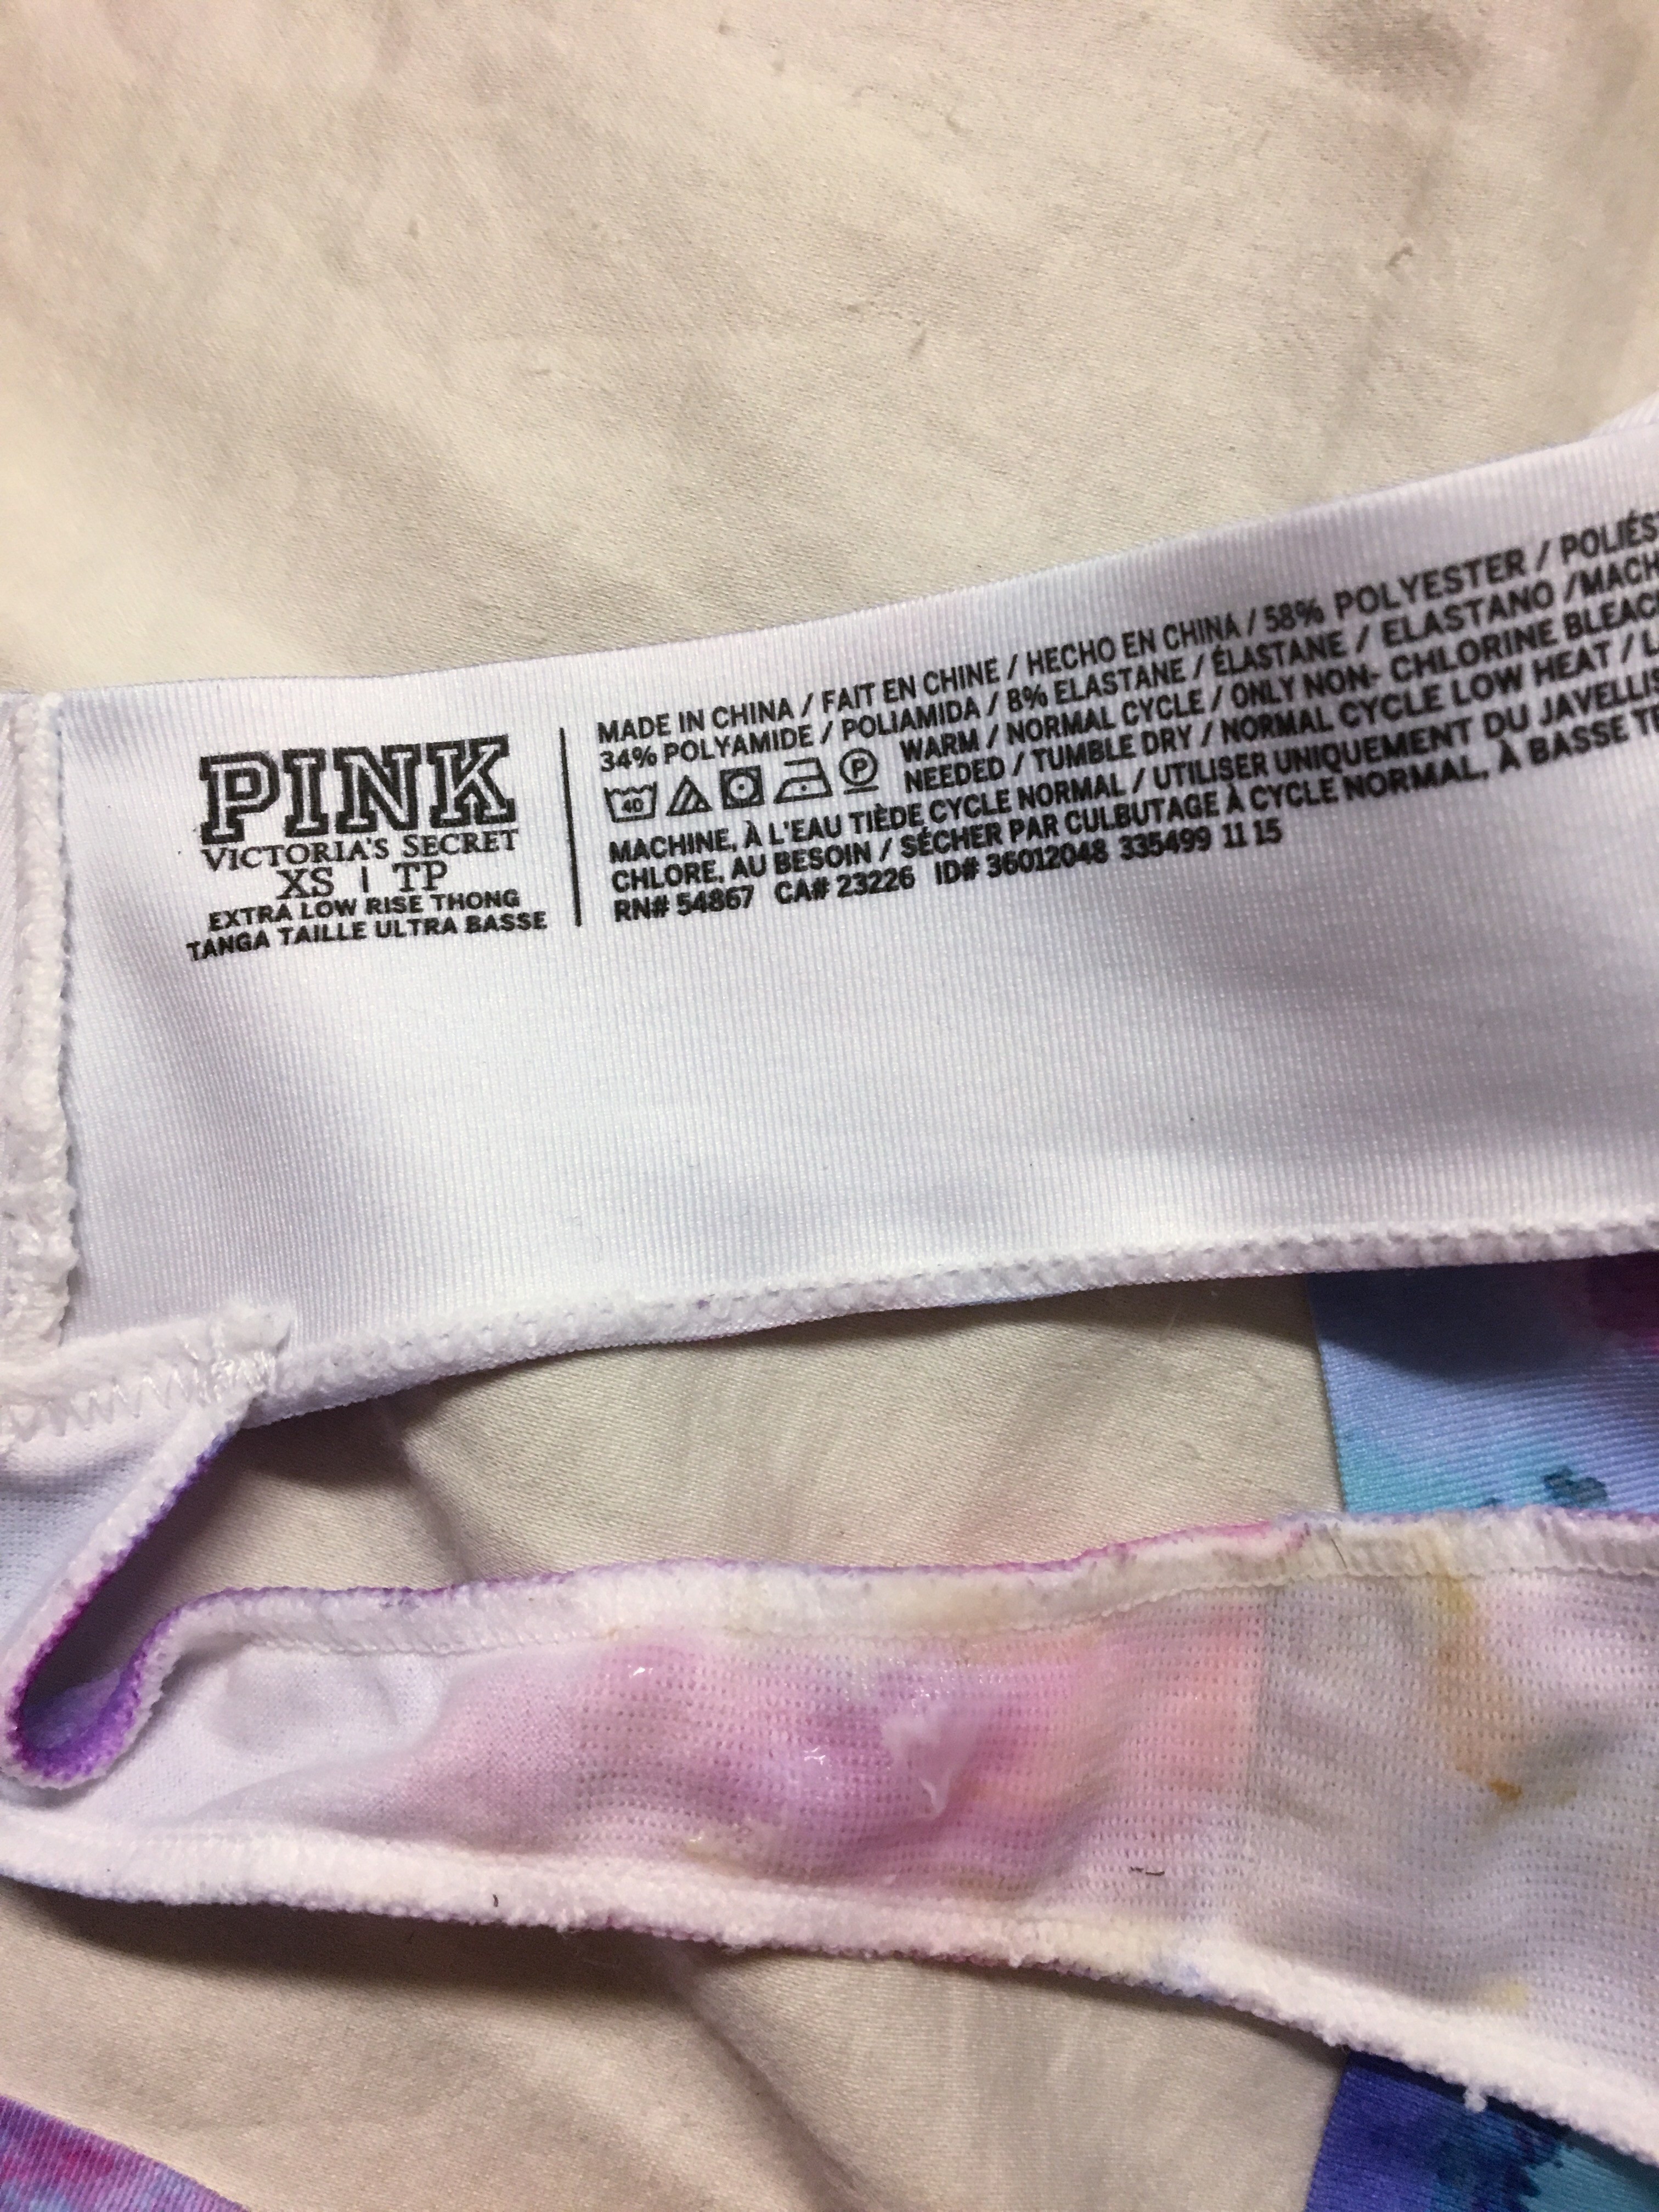 Fun Sized Asian - Victoria's Secret Panties